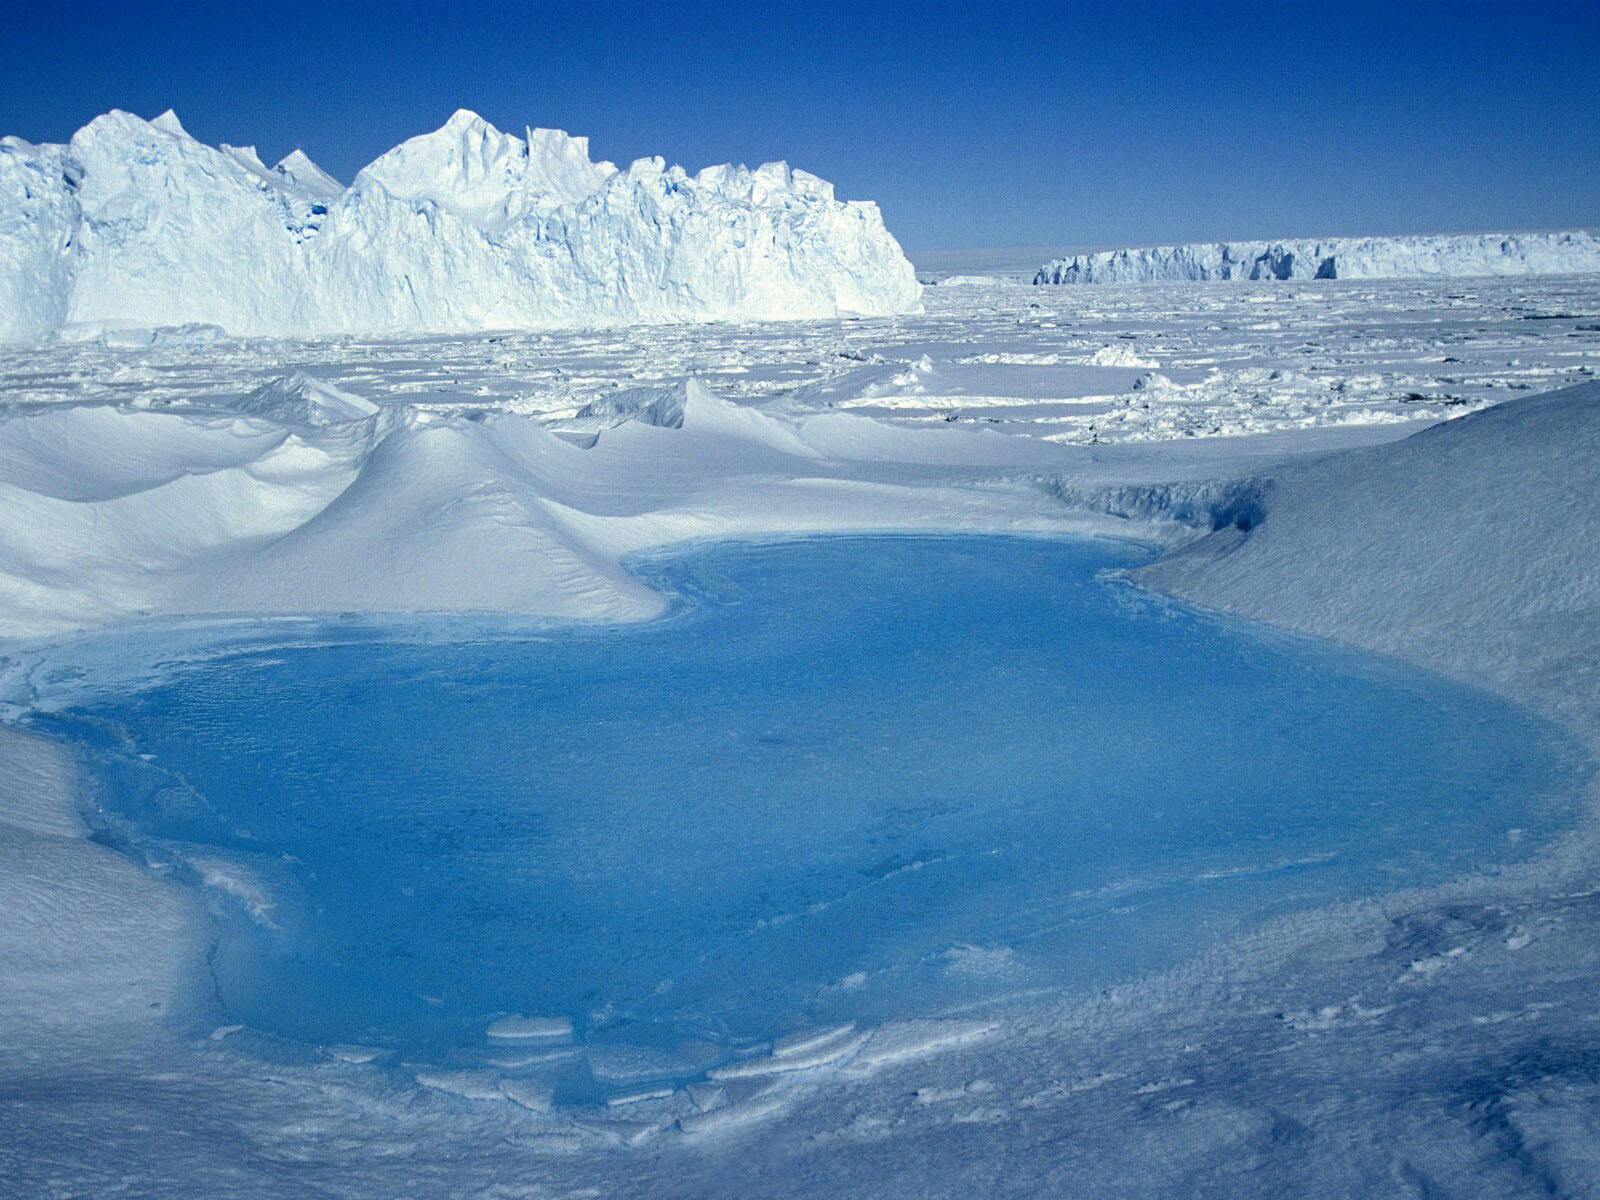 ghiaccio wallpaper hd,ghiaccio,artico,oceano artico,ghiacciaio,cielo